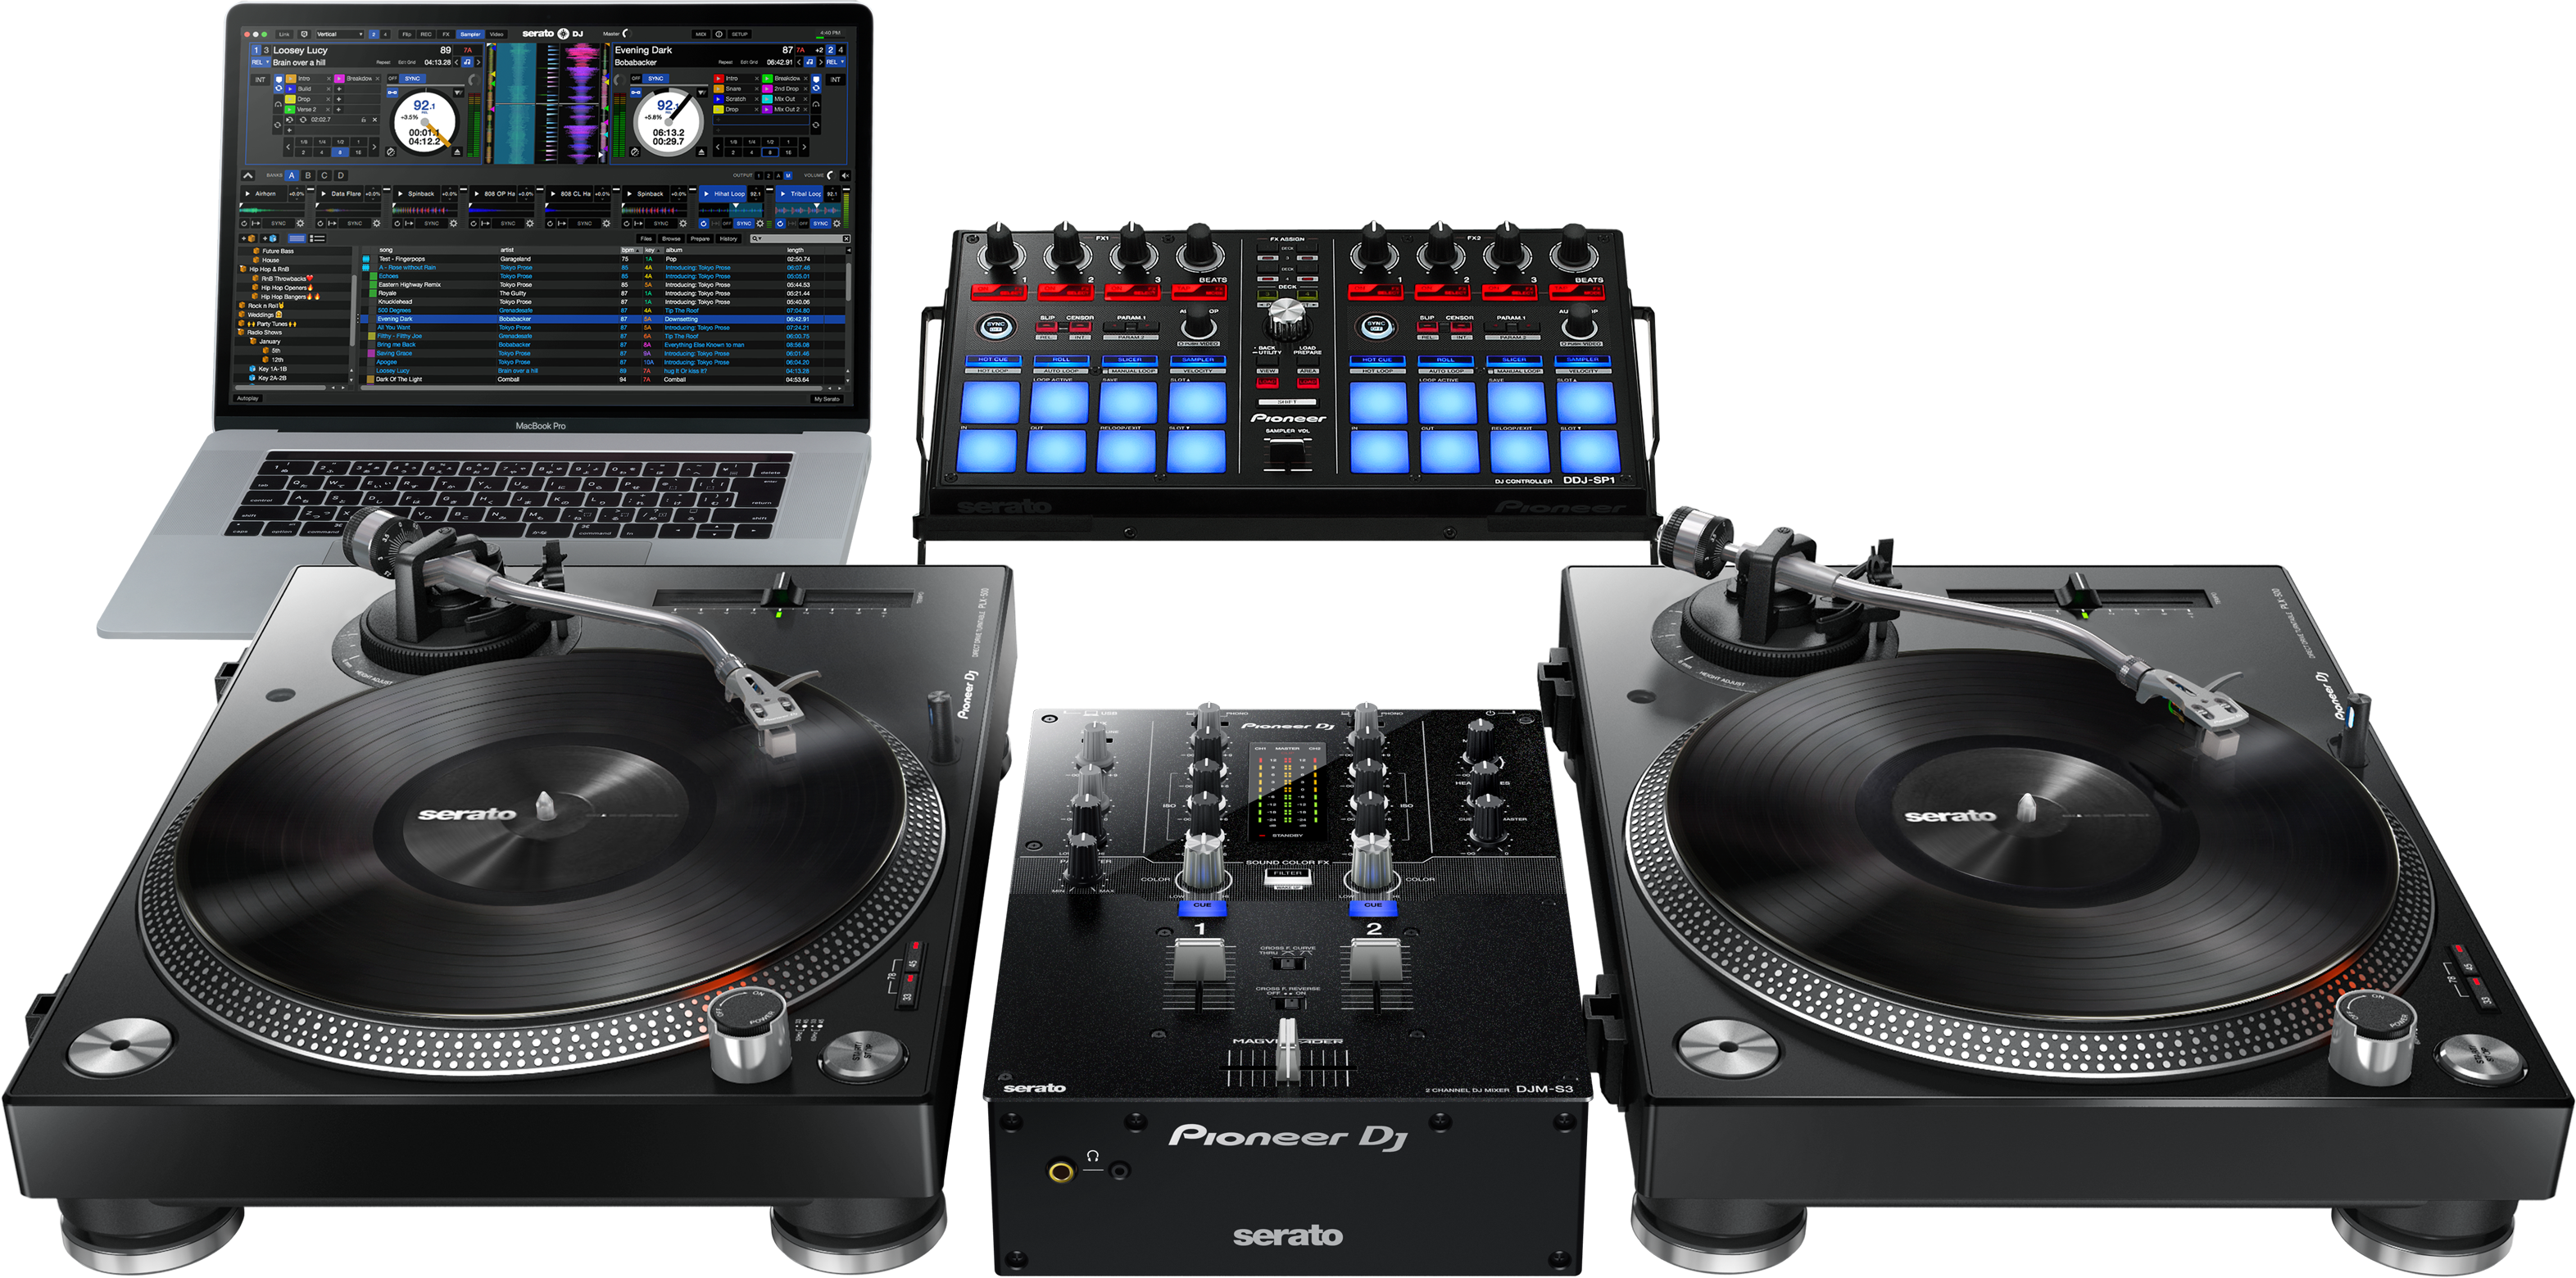 Pioneer Dj Djm-s3 - DJ-Mixer - Variation 2